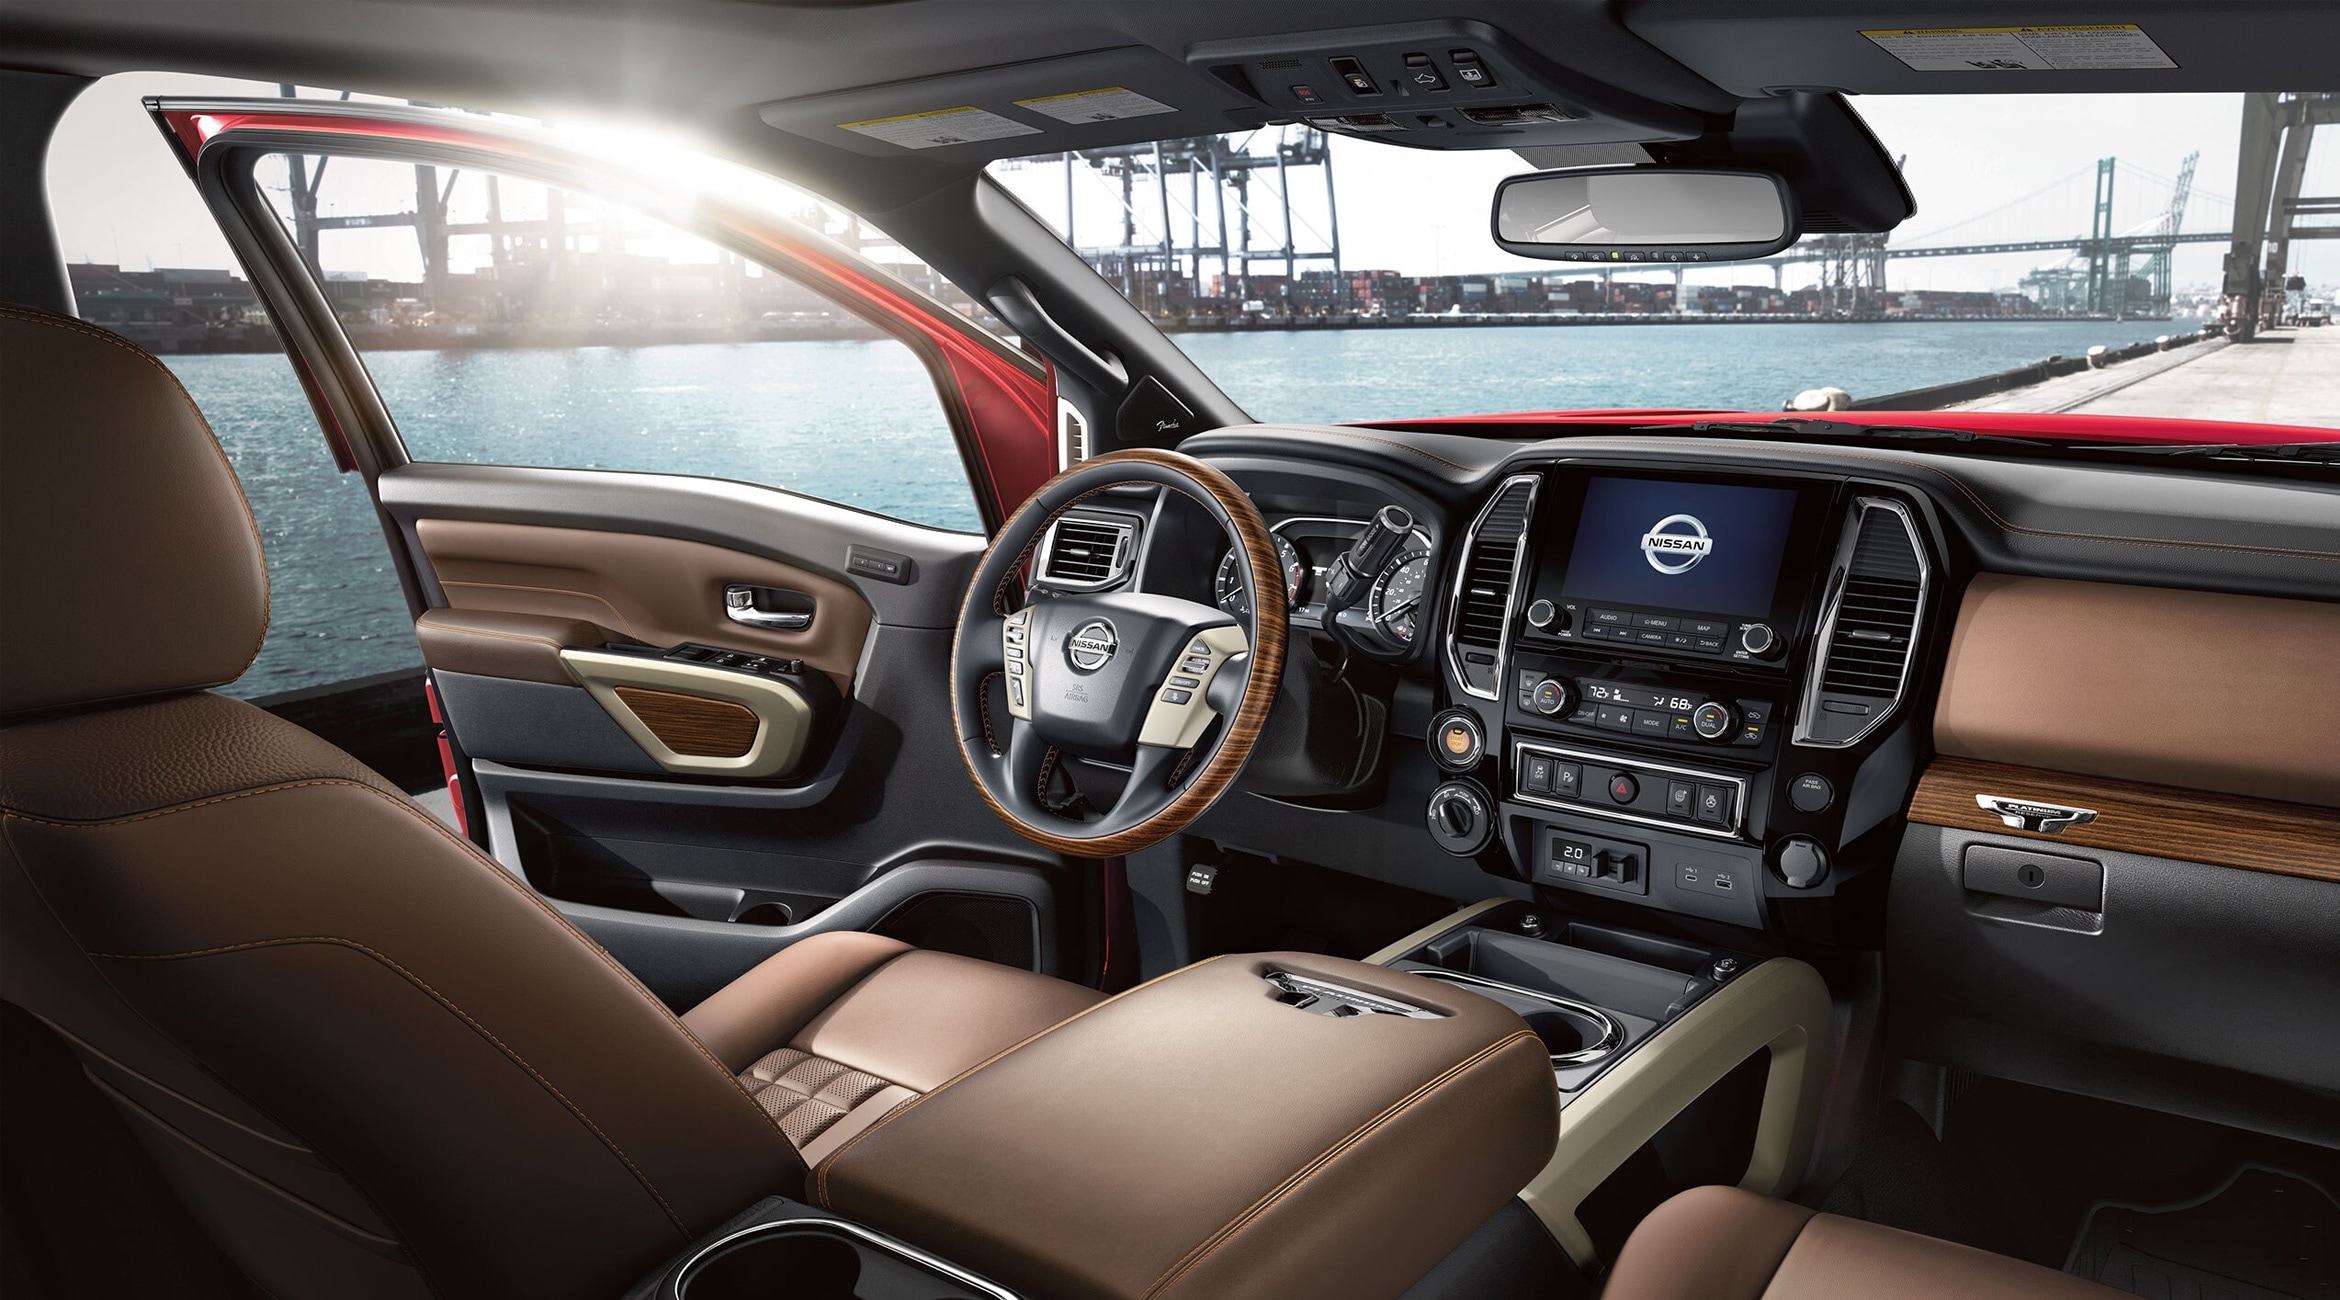 Spacious interior in the Nissan Titan and Nissan Titan XD truck